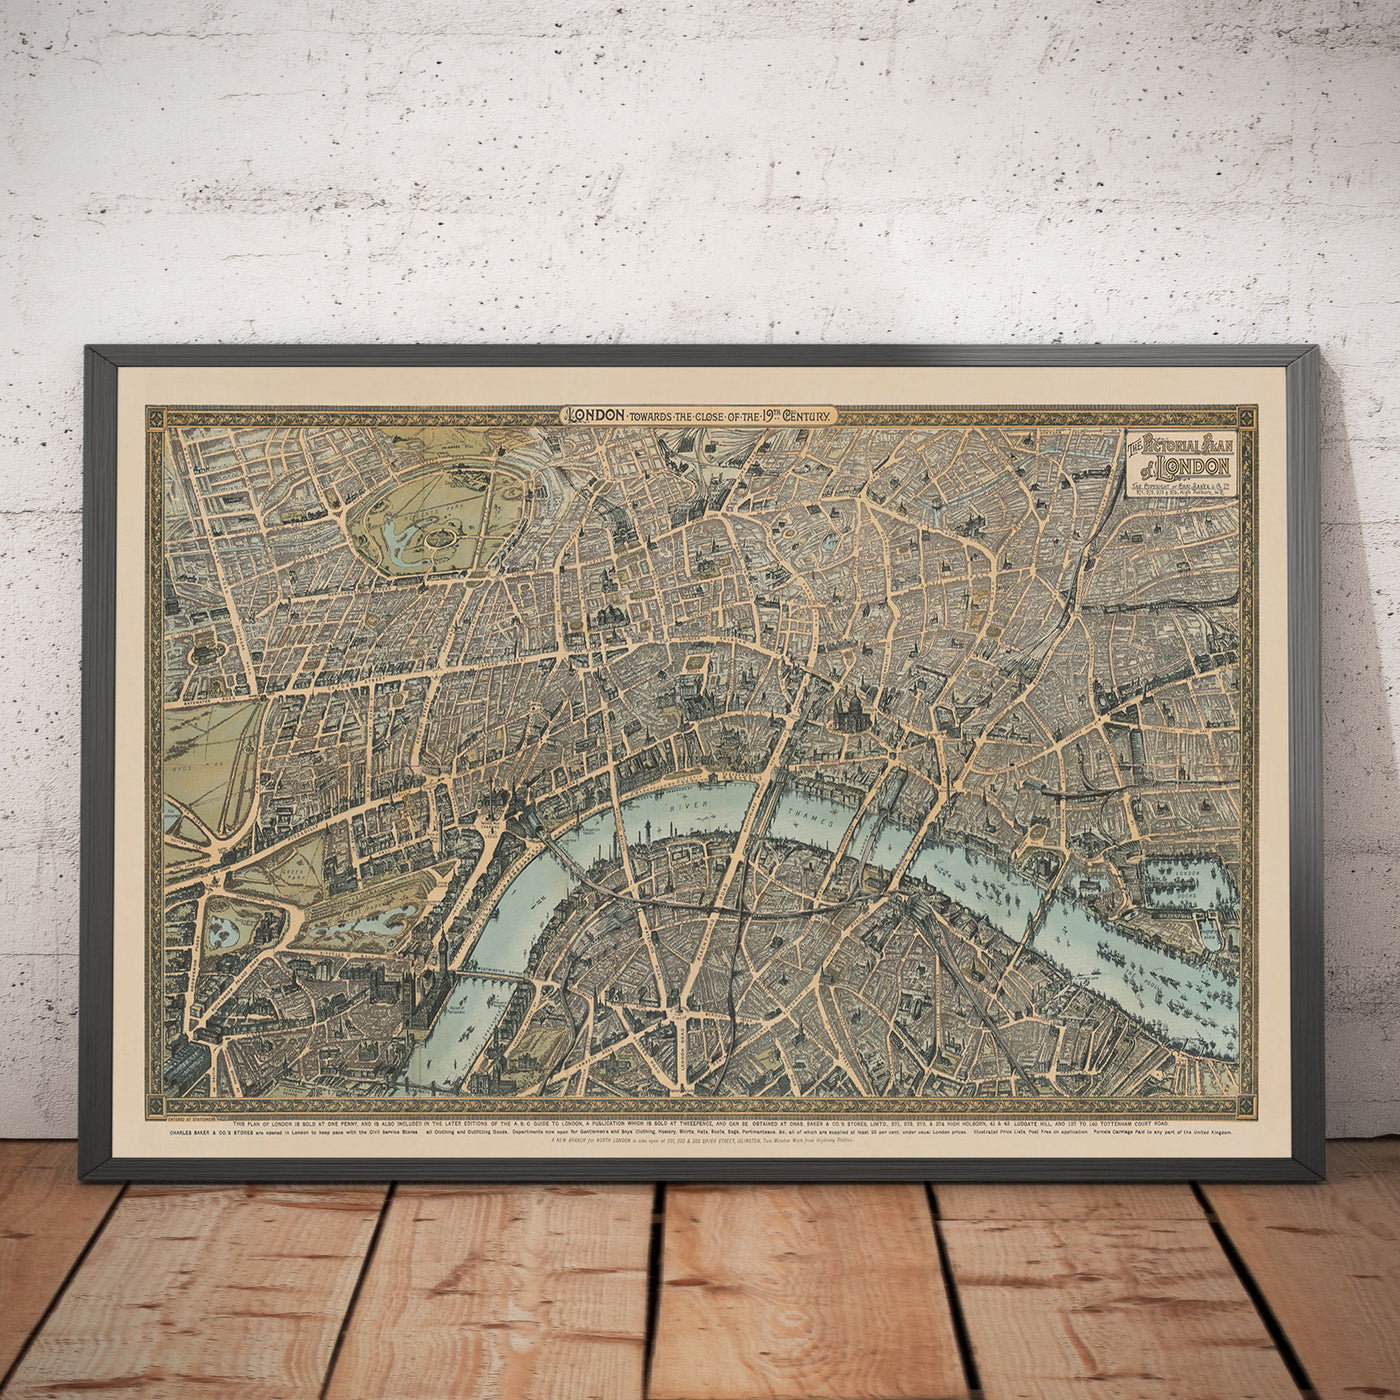 Antiguo mapa a vista de pájaro de Londres en 1892 por Charles Baker & Co - Westminster, City of London, Lambeth, Covent Garden, Marylebone